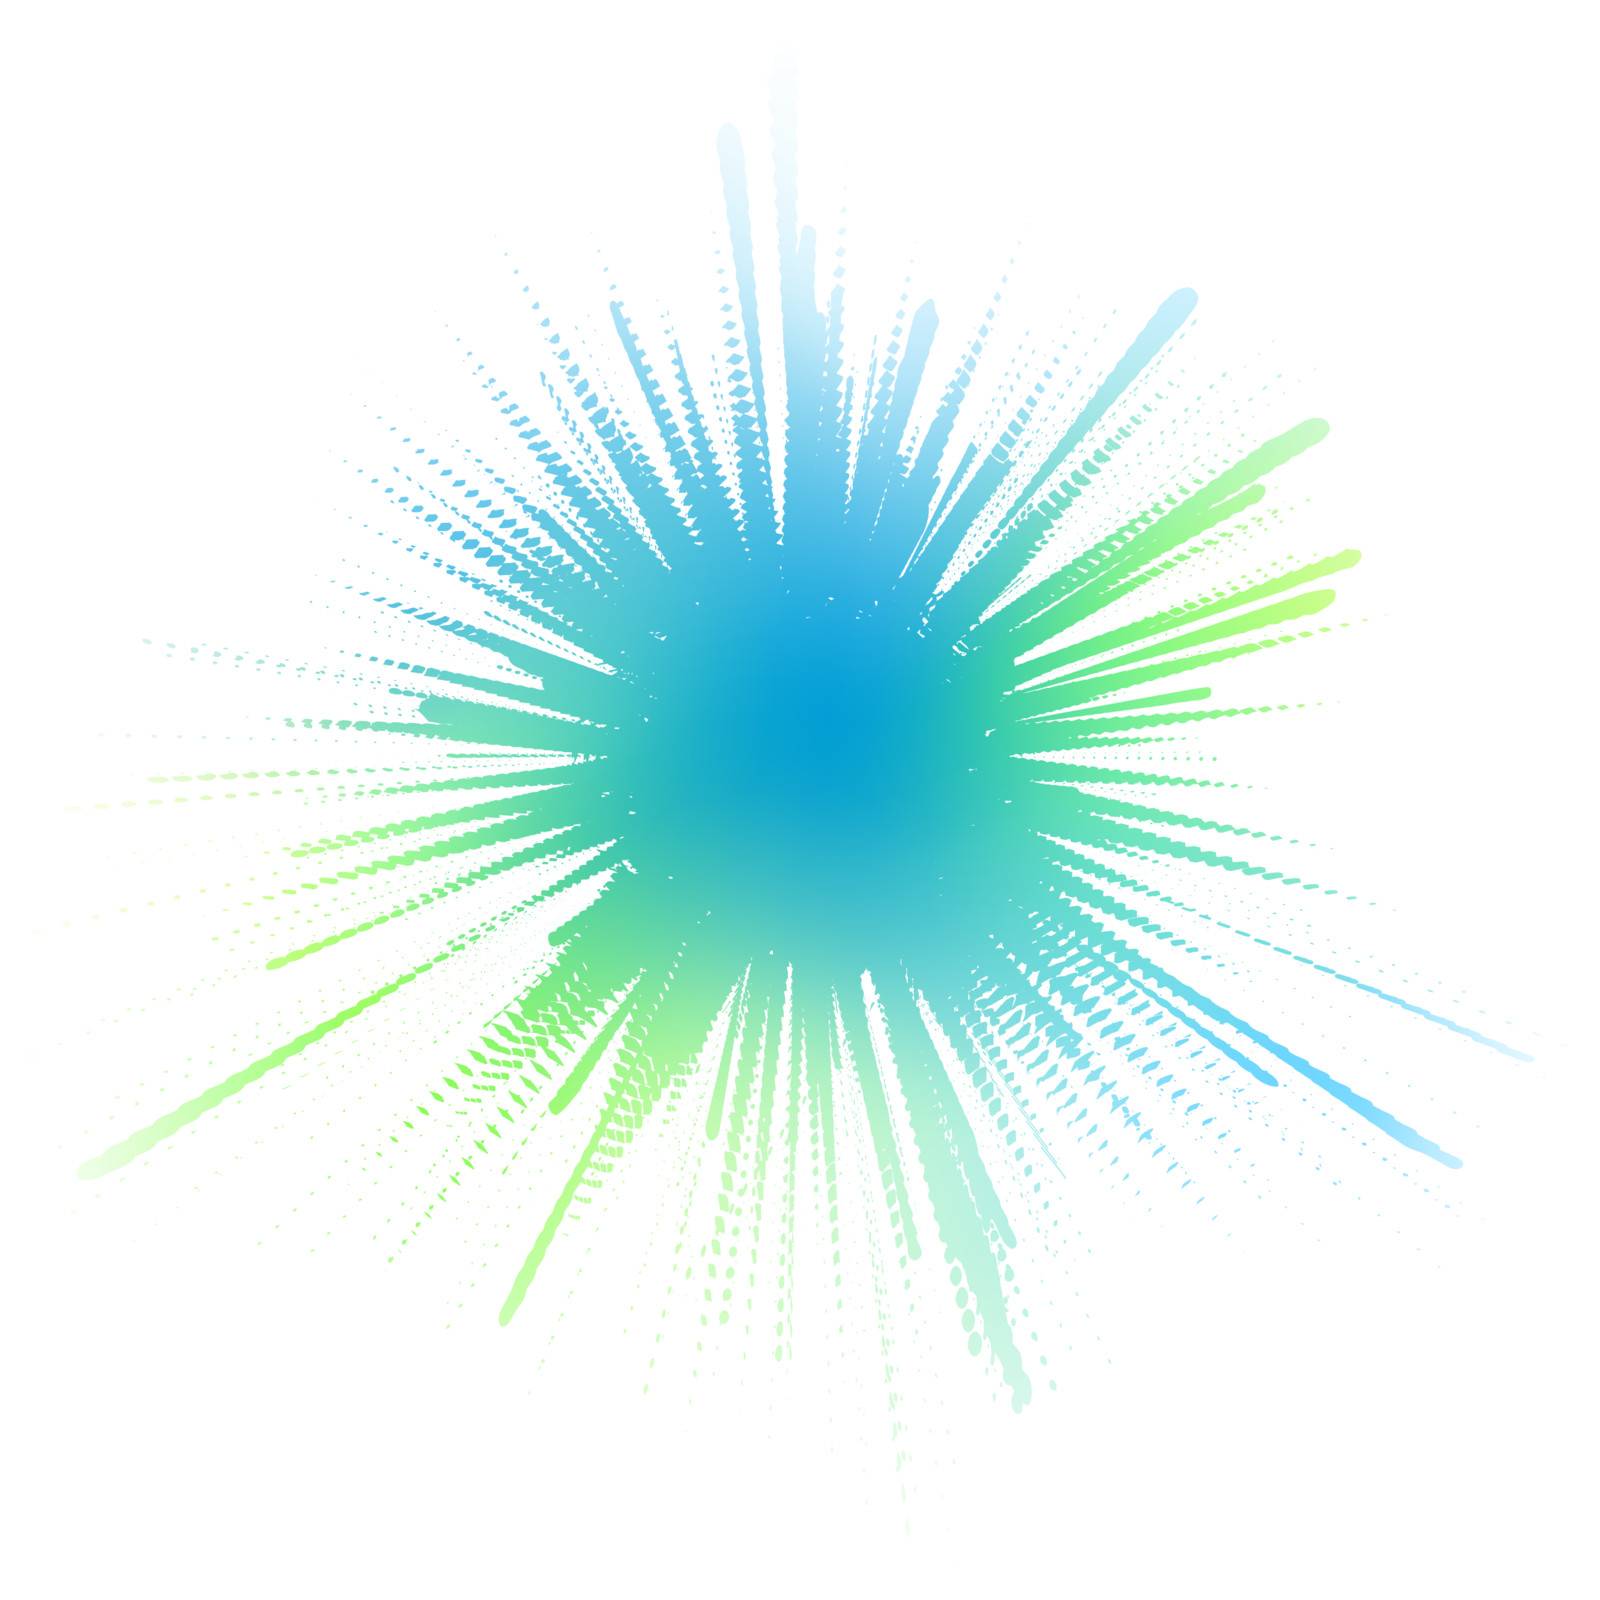 Editable vector illustration of a blue-green ink splash made by masking a background color mesh